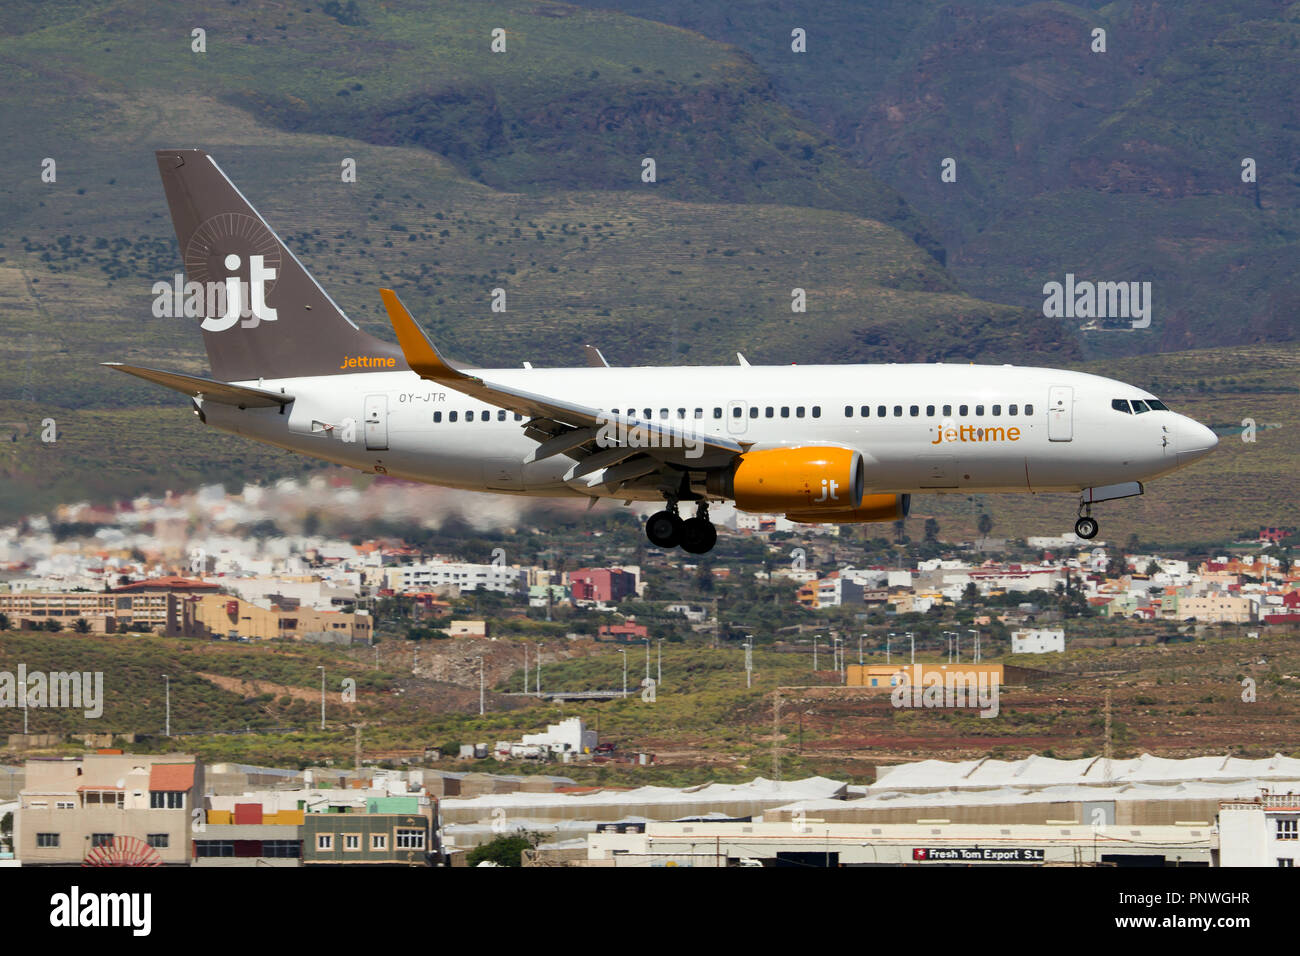 Gran canaria las palmas airport hi-res stock photography and images - Alamy